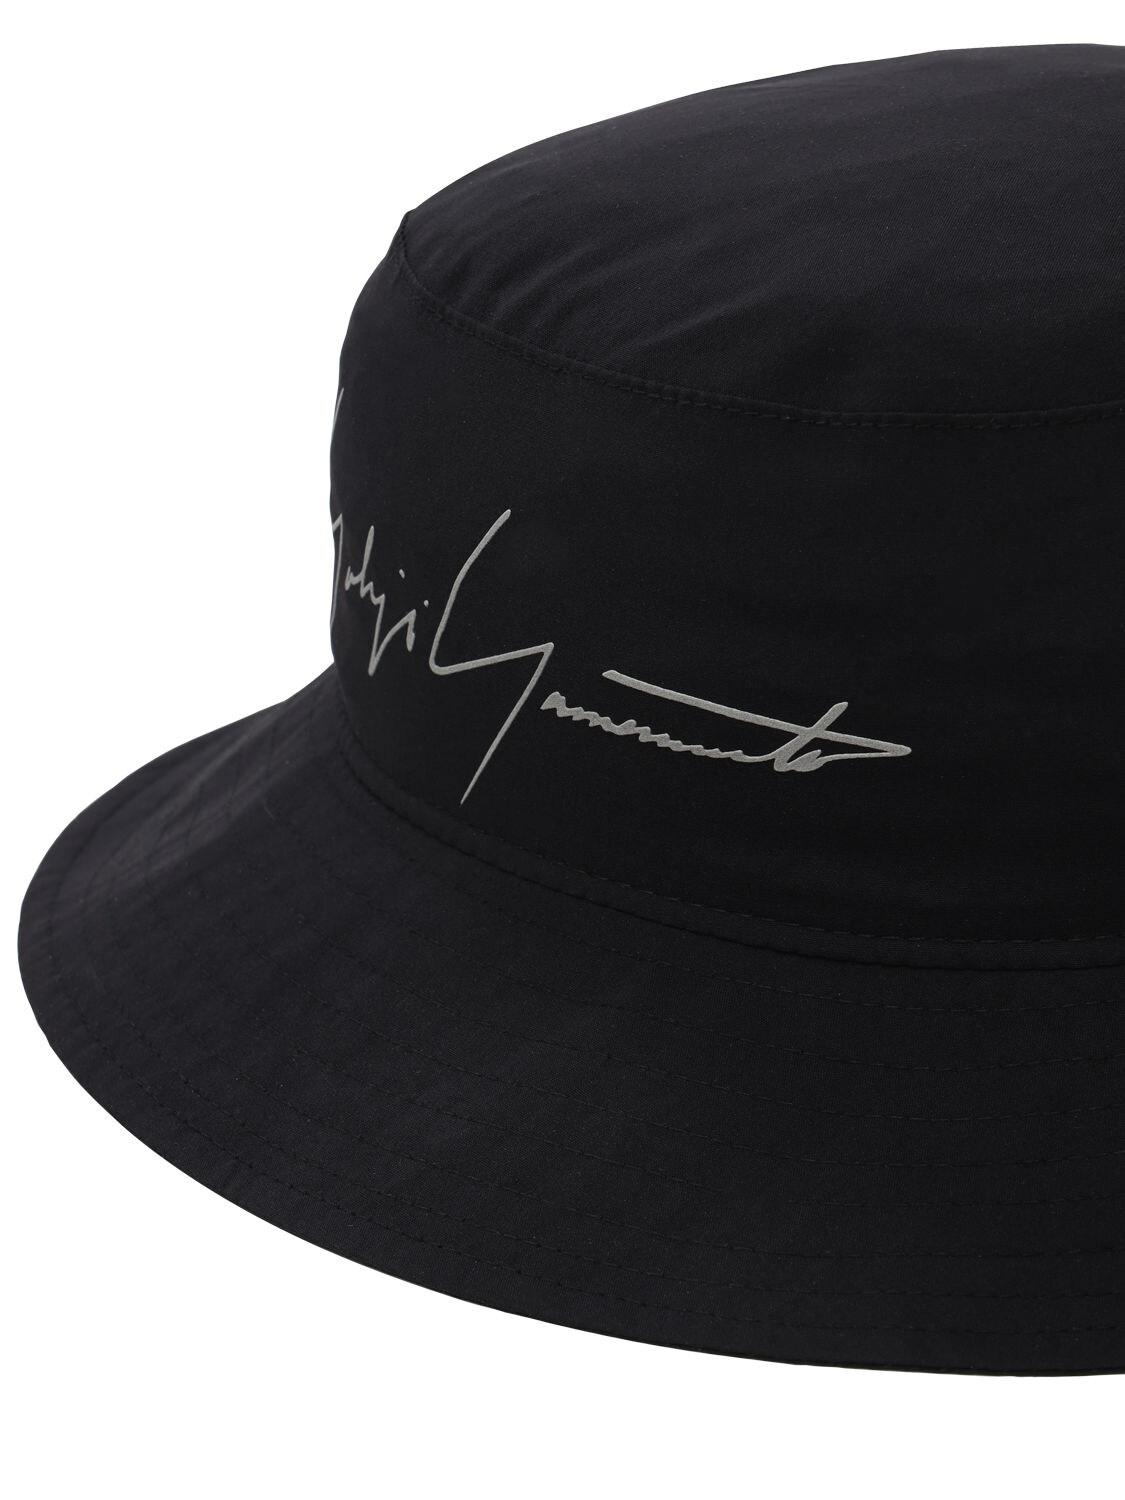 Yohji Yamamoto Gore-tex® Logo Bucket Hat in Black for Men | Lyst